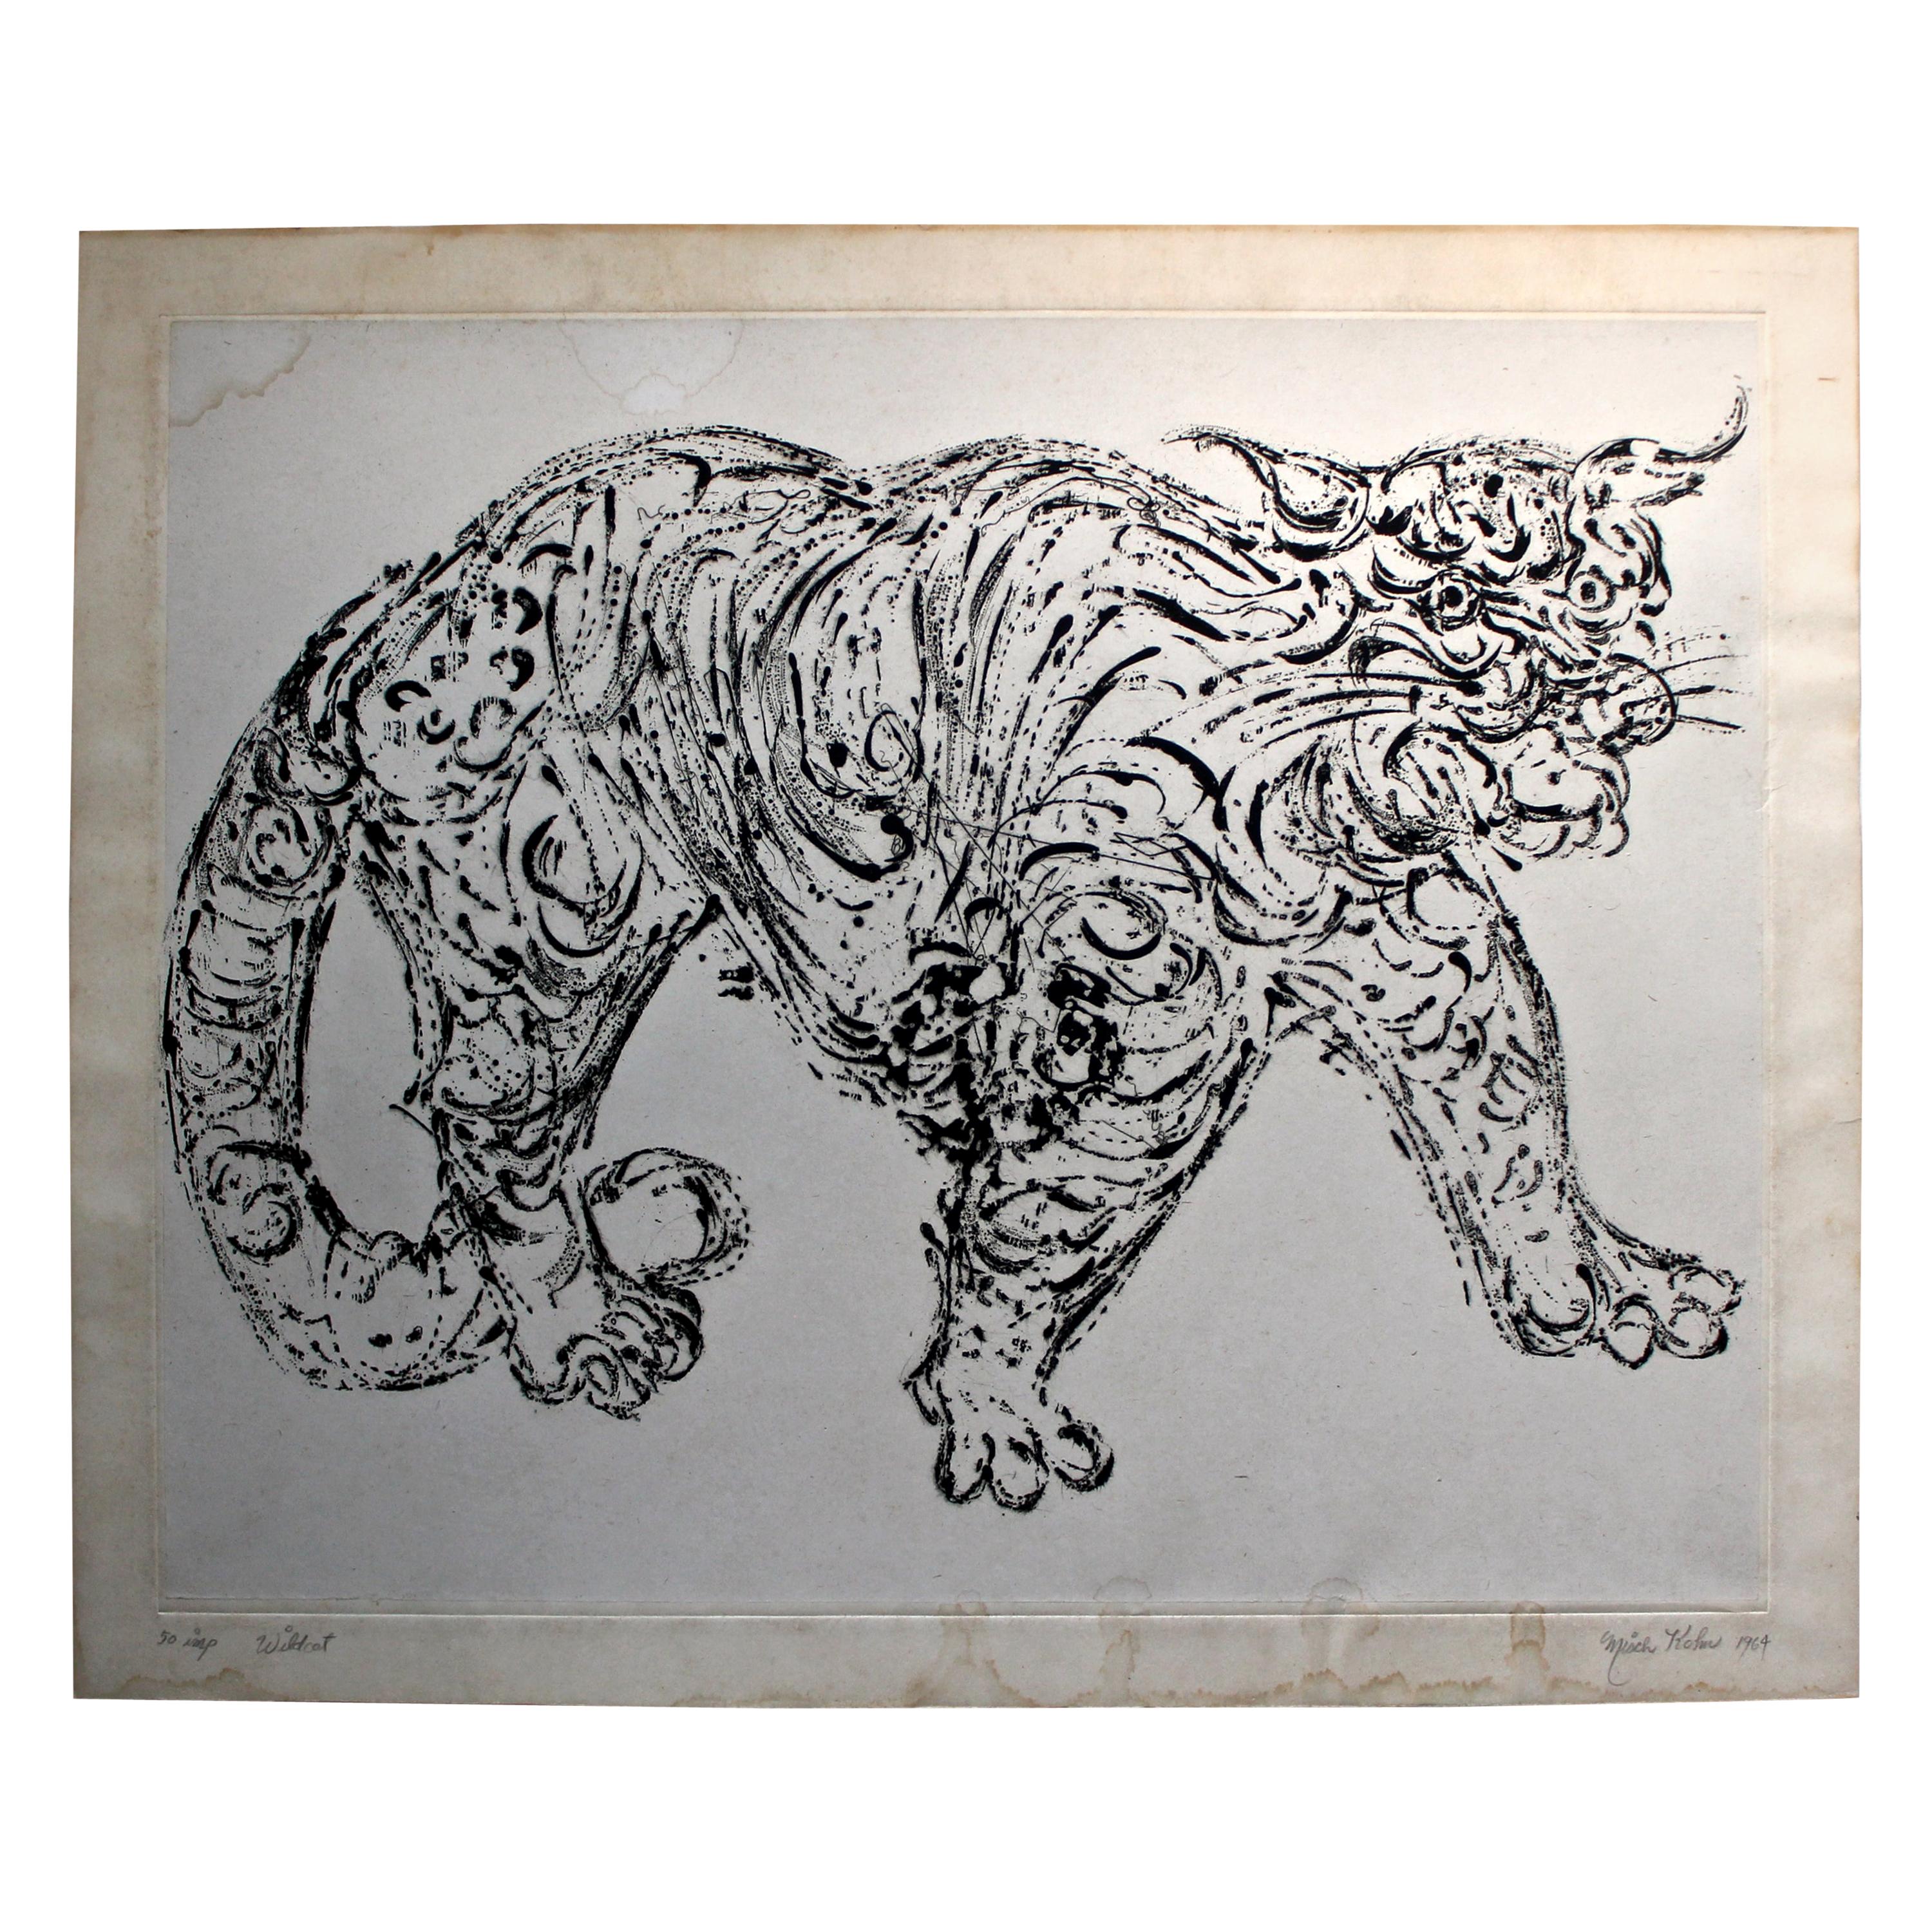 Misch Kohn 1964 Etching "Wildcat" For Sale